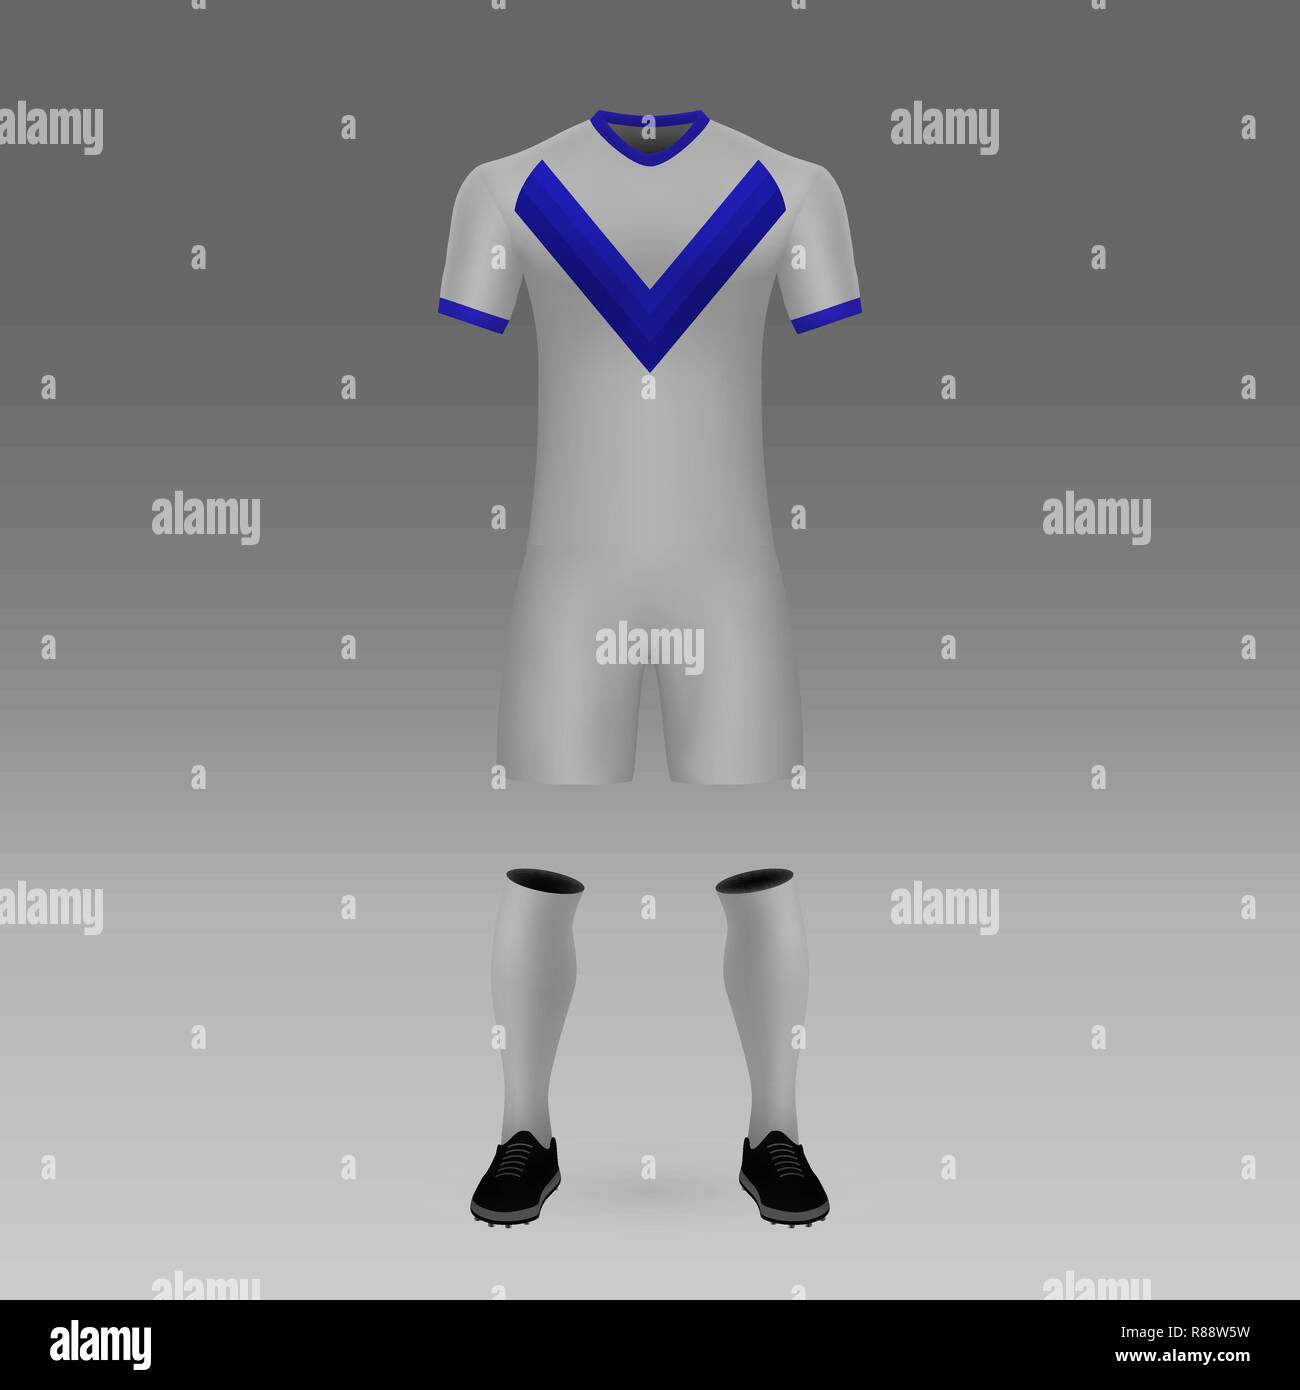 Football Kit Velez Sarsfield Shirt Template For Soccer Jersey Vector Illustration Stock Vector Image Art Alamy